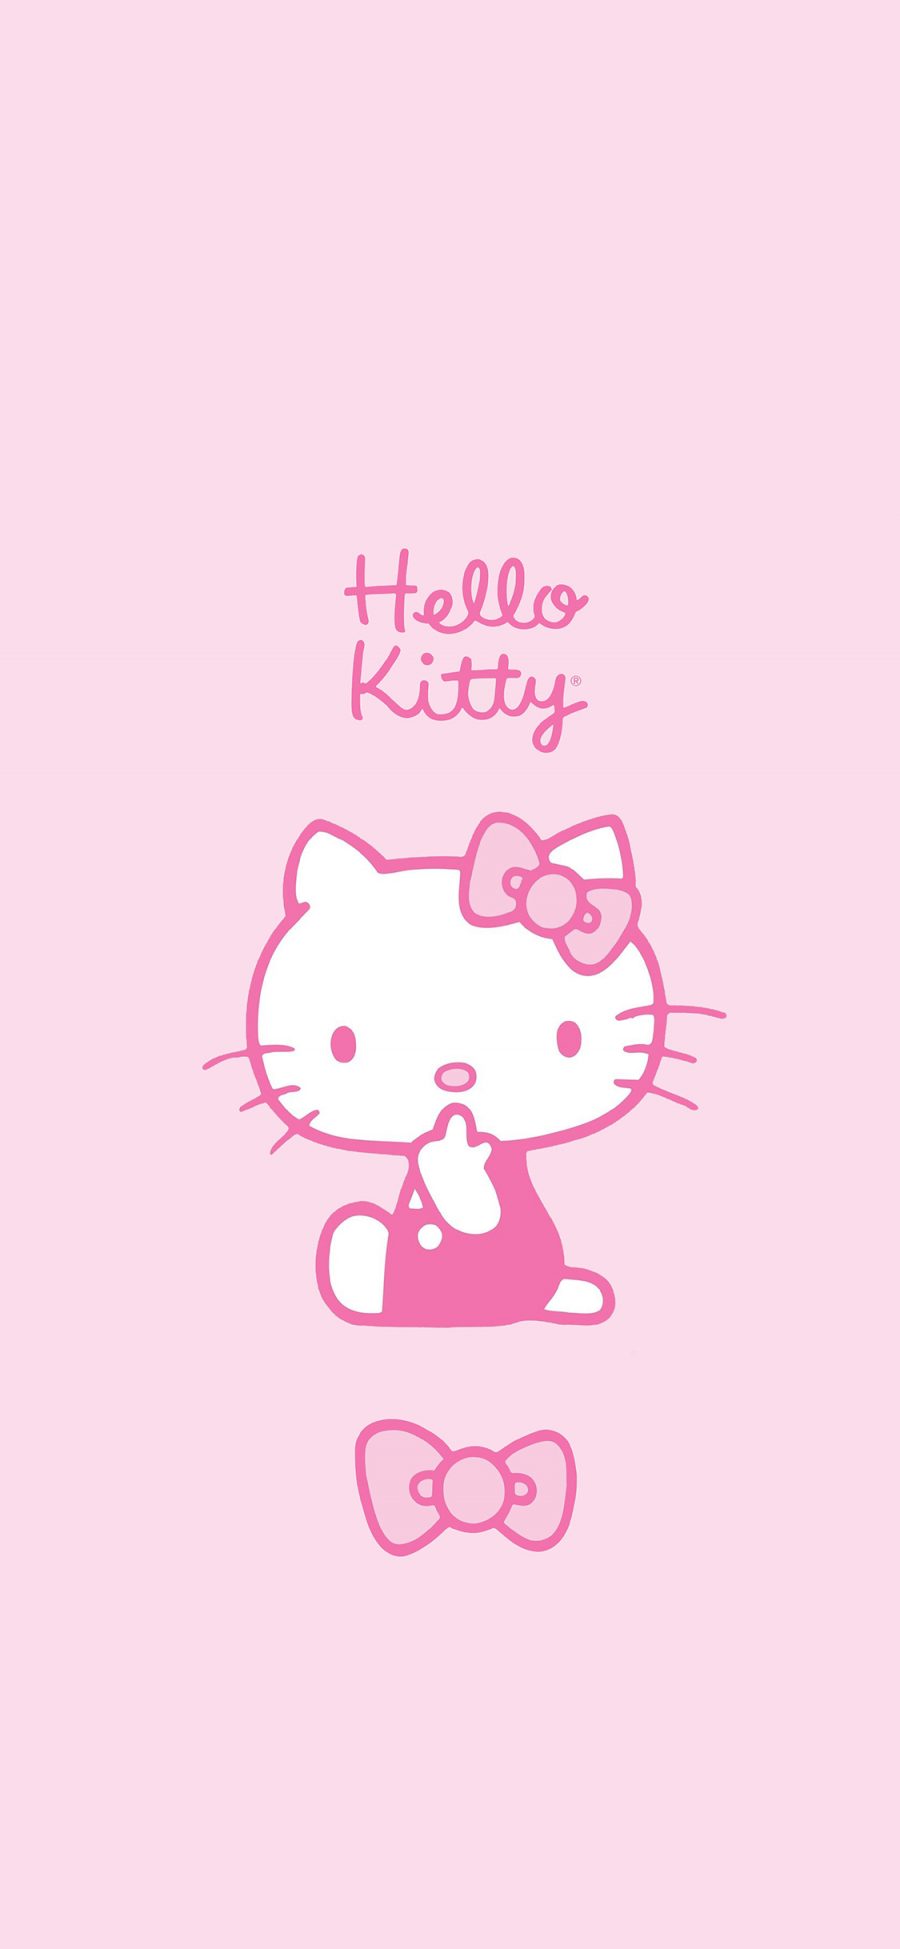 [2436×1125]Hello kitty 动画 卡通 粉色 蝴蝶结 苹果手机动漫壁纸图片